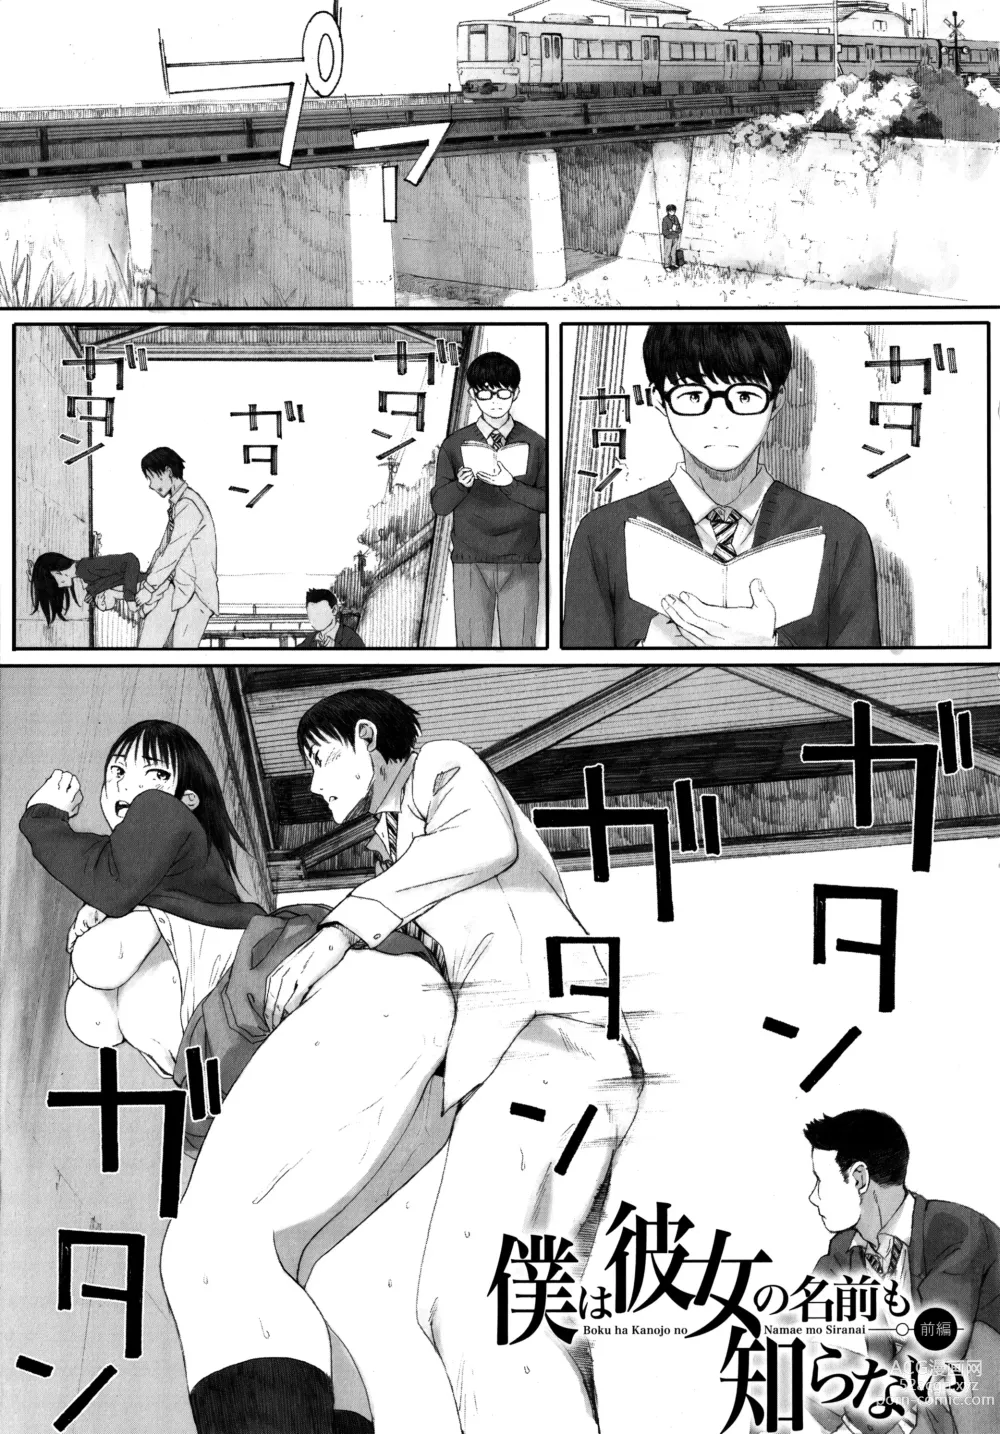 Page 4 of manga Gunjo Gunzo